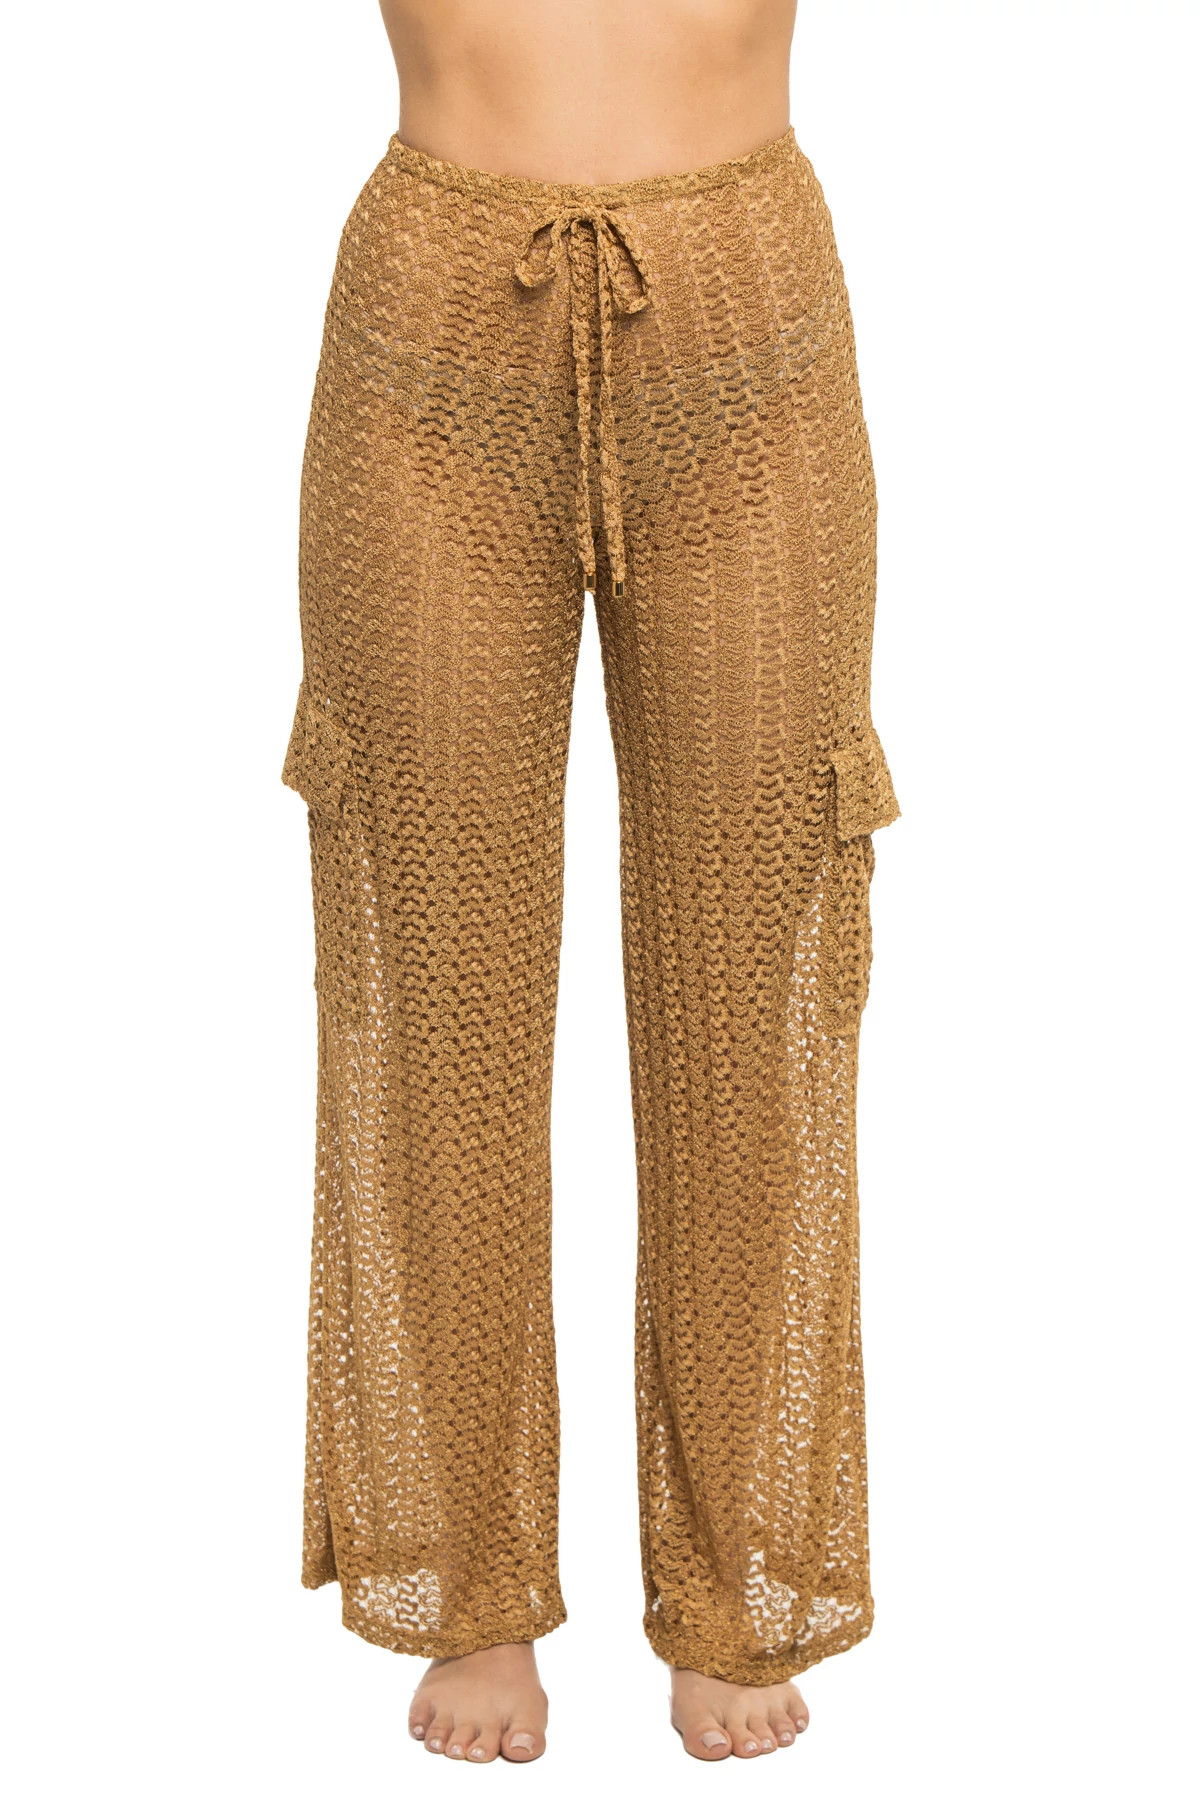 GOLD Metallic Crochet Cargo Pants image number 1